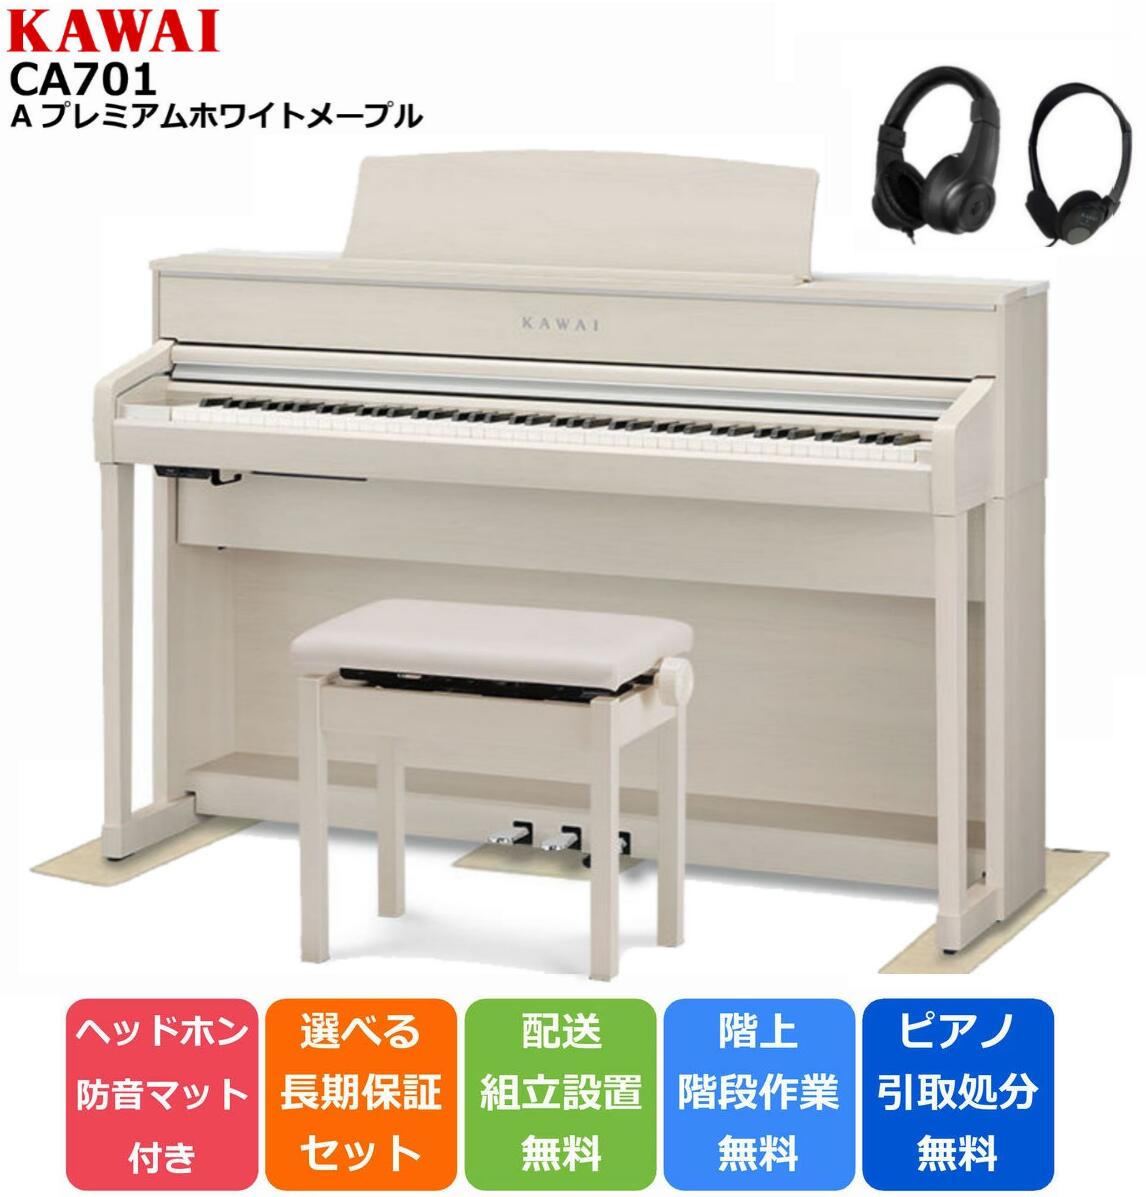 KAWAI カワイ DigitalPiano 電子ピアノ 88鍵 木製鍵盤 CA701 A プレミアムホワイトメープル調仕上げ